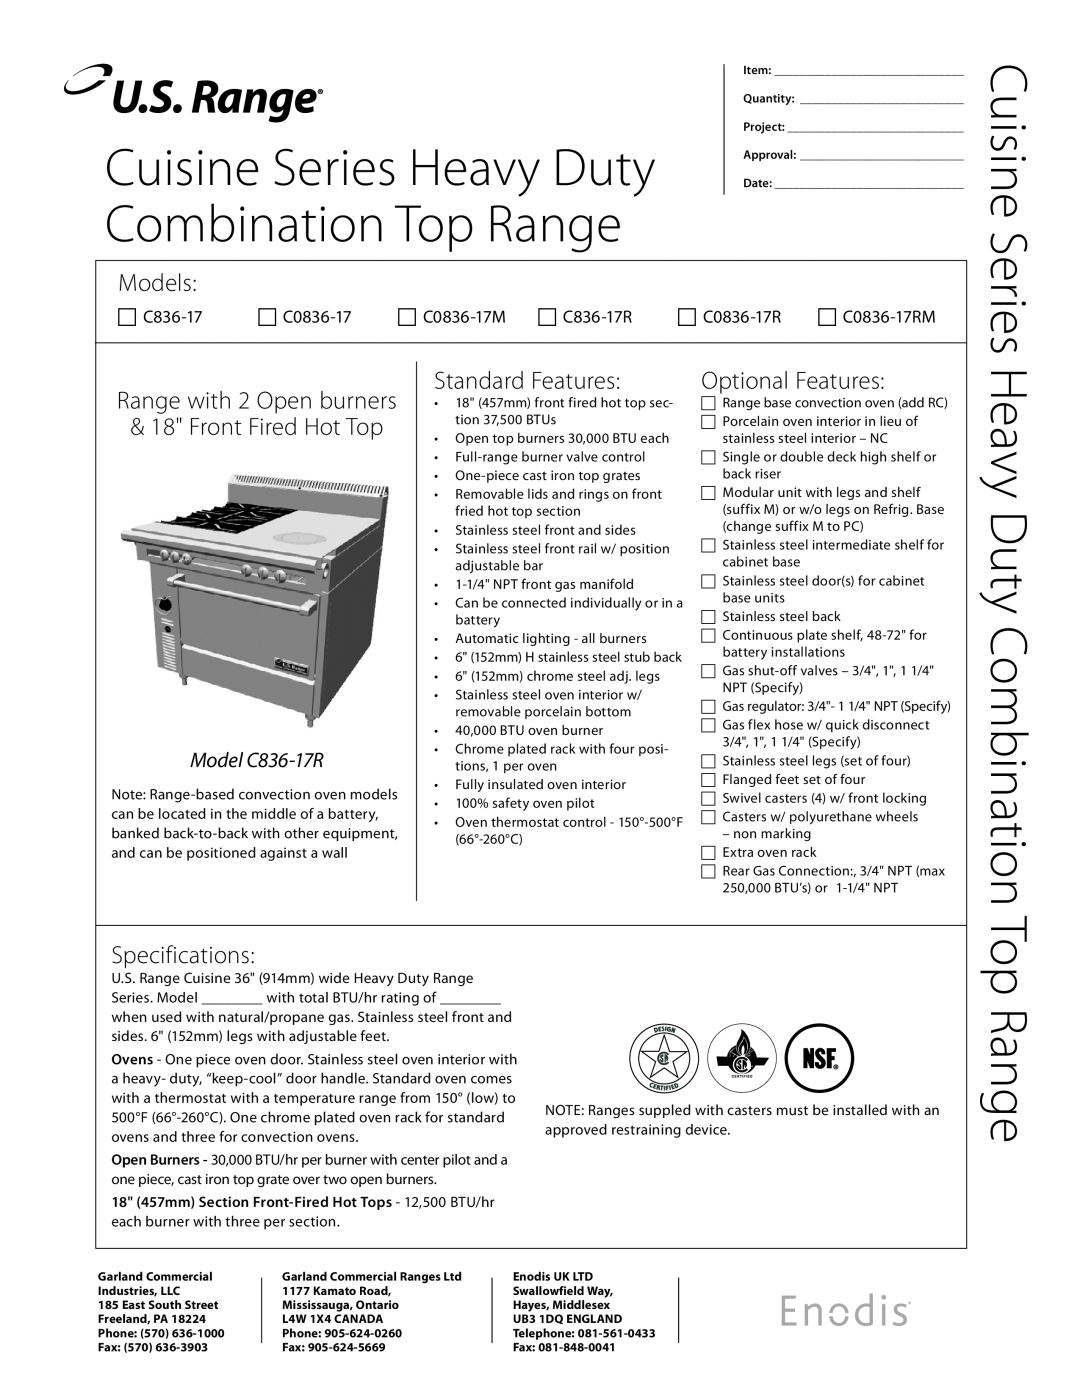 Garland C836-17R specifications Combination Top Range, Cuisine Series Heavy Duty, Heavy Duty Combination, Models 